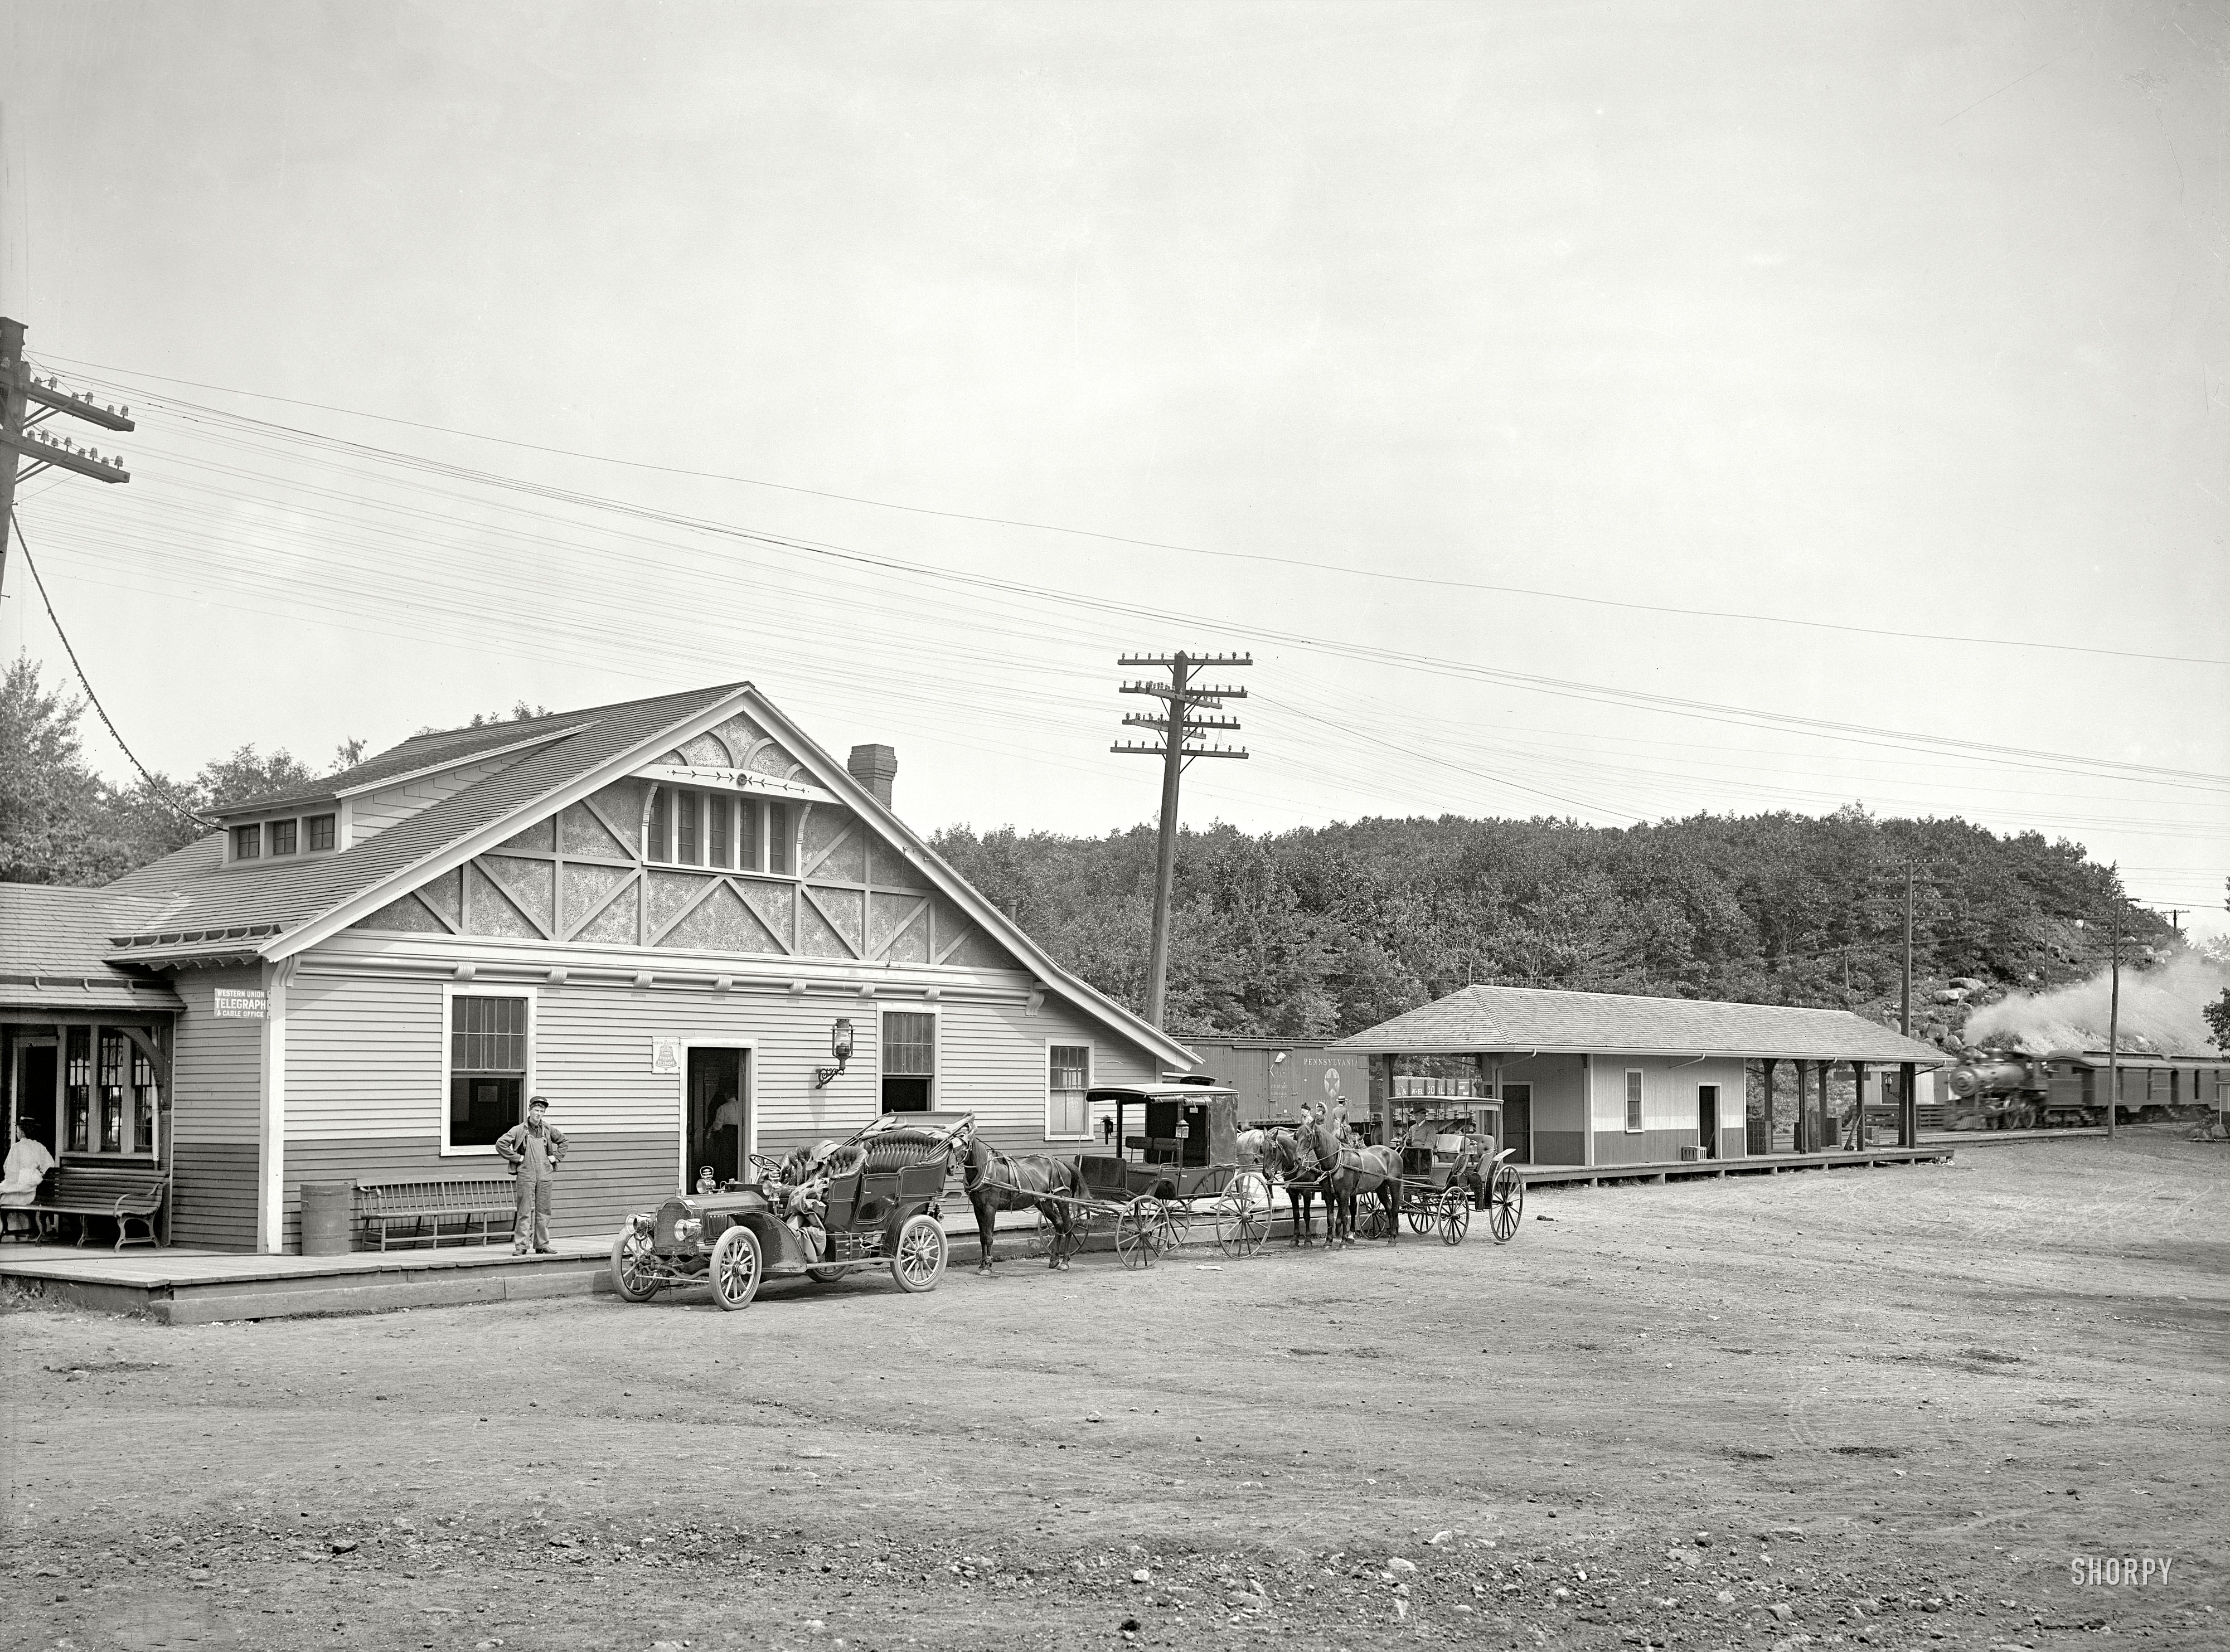 Circa 1906. "Railroad station, Magnolia, Massachusetts." Multi-modal transportation. 8x10 glass negative, Detroit Publishing Co. View full size.